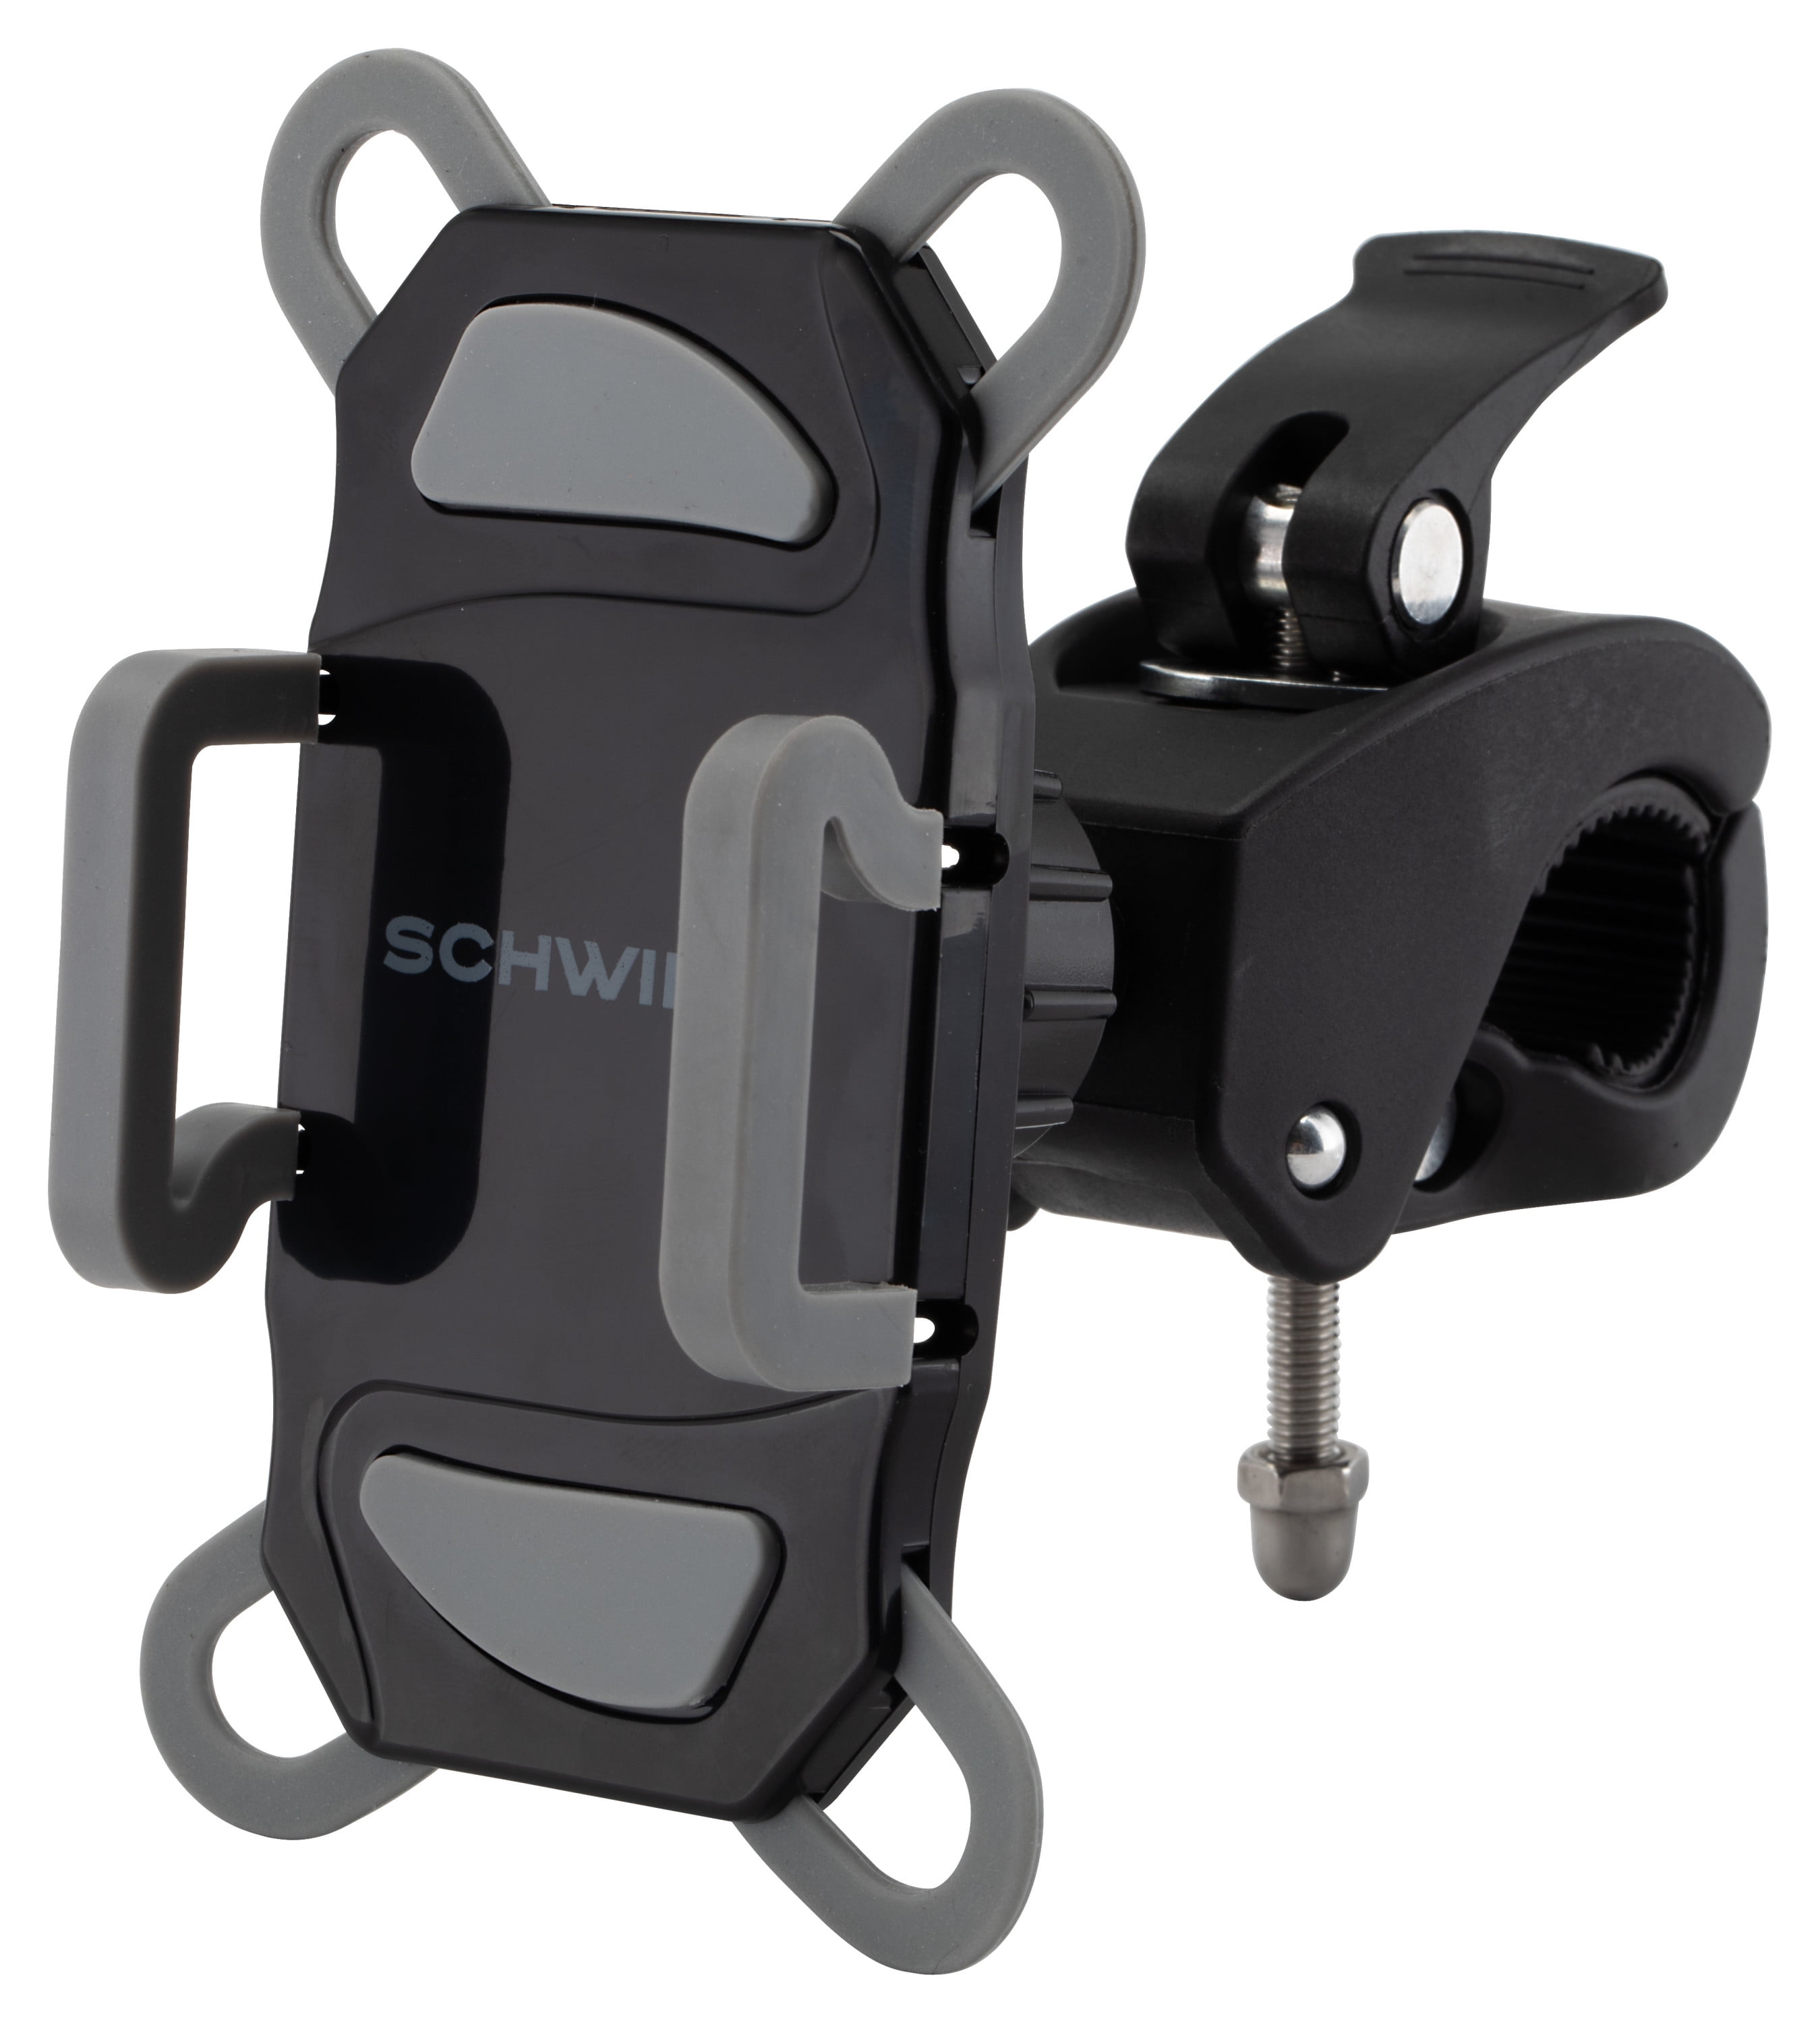 Schwinn Adjustable Smarphone Mount for Bikes, 360 Rotation